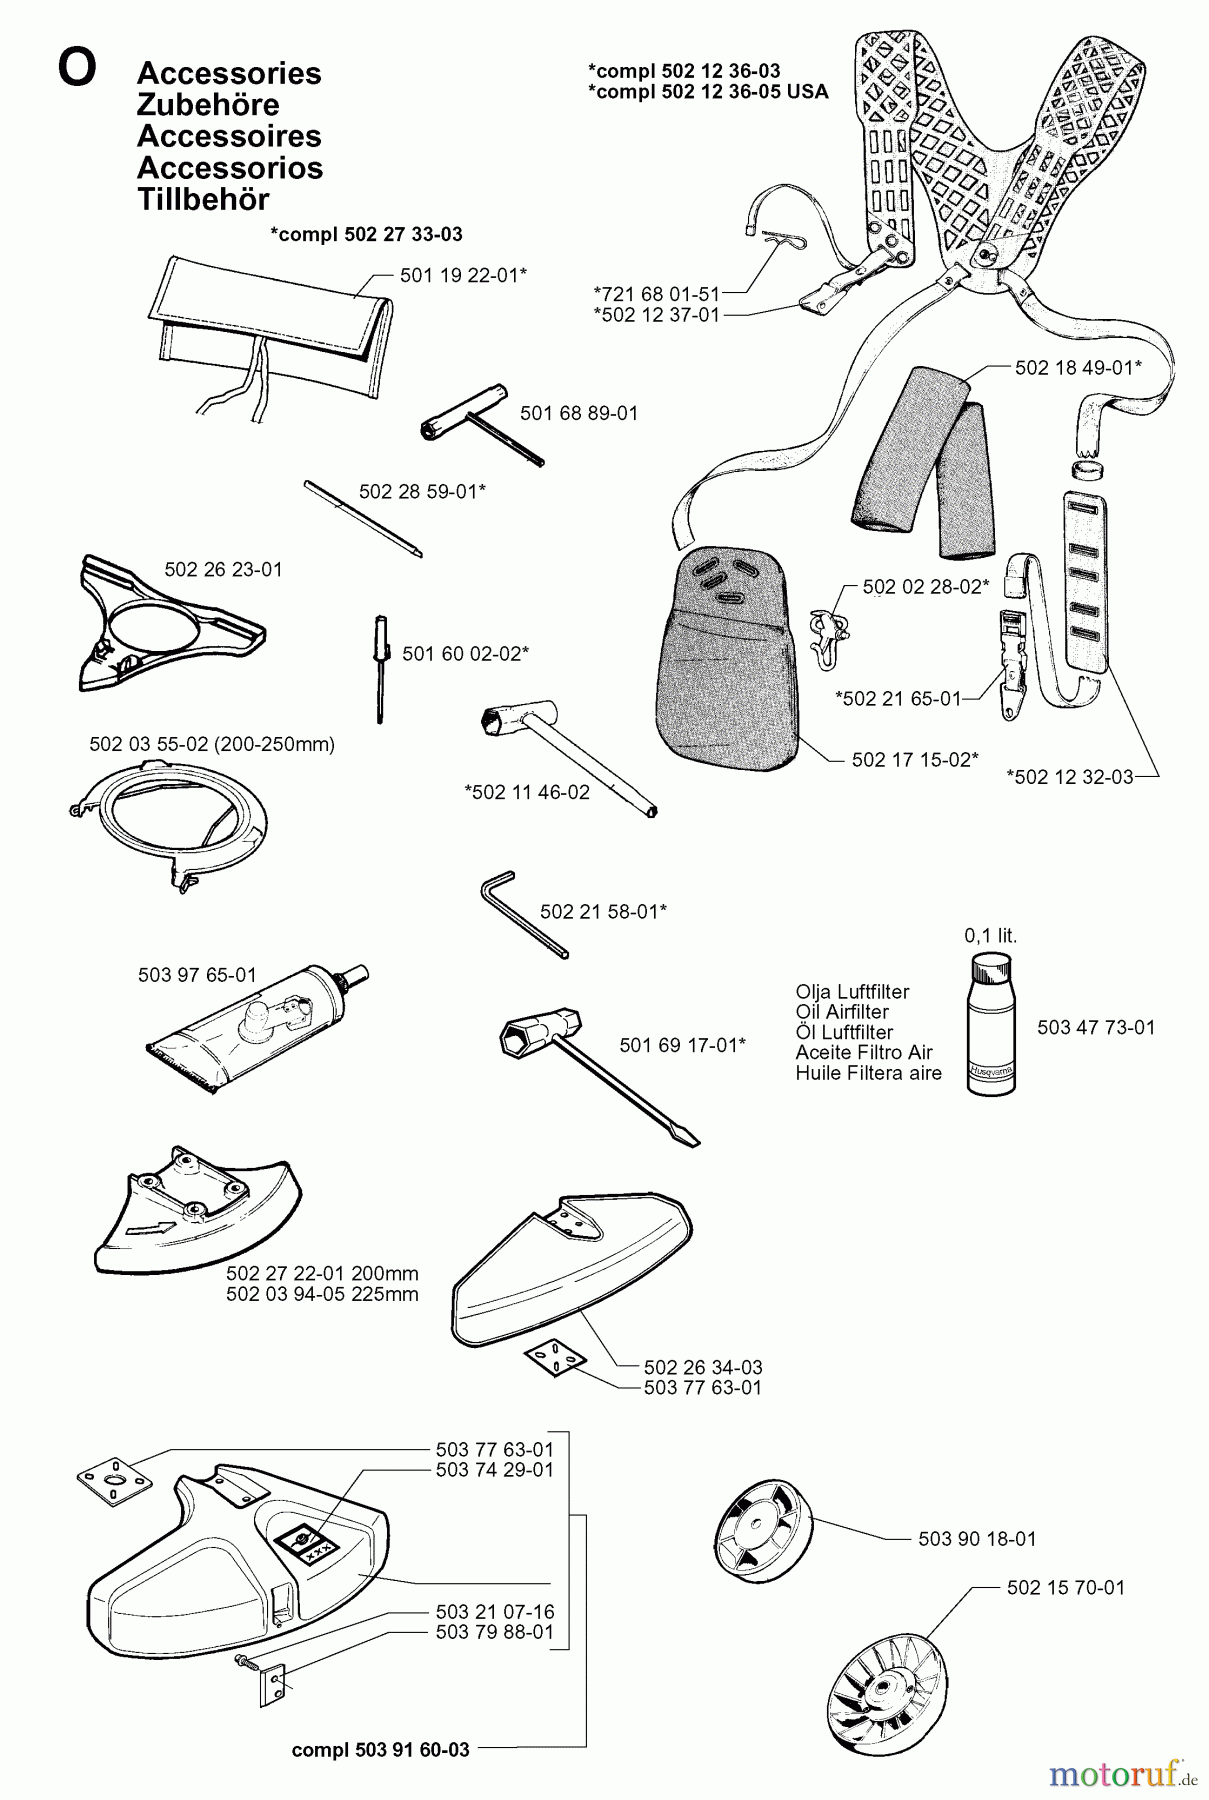  Jonsered Motorsensen, Trimmer GR41 - Jonsered String/Brush Trimmer (1998-06) ACCESSORIES